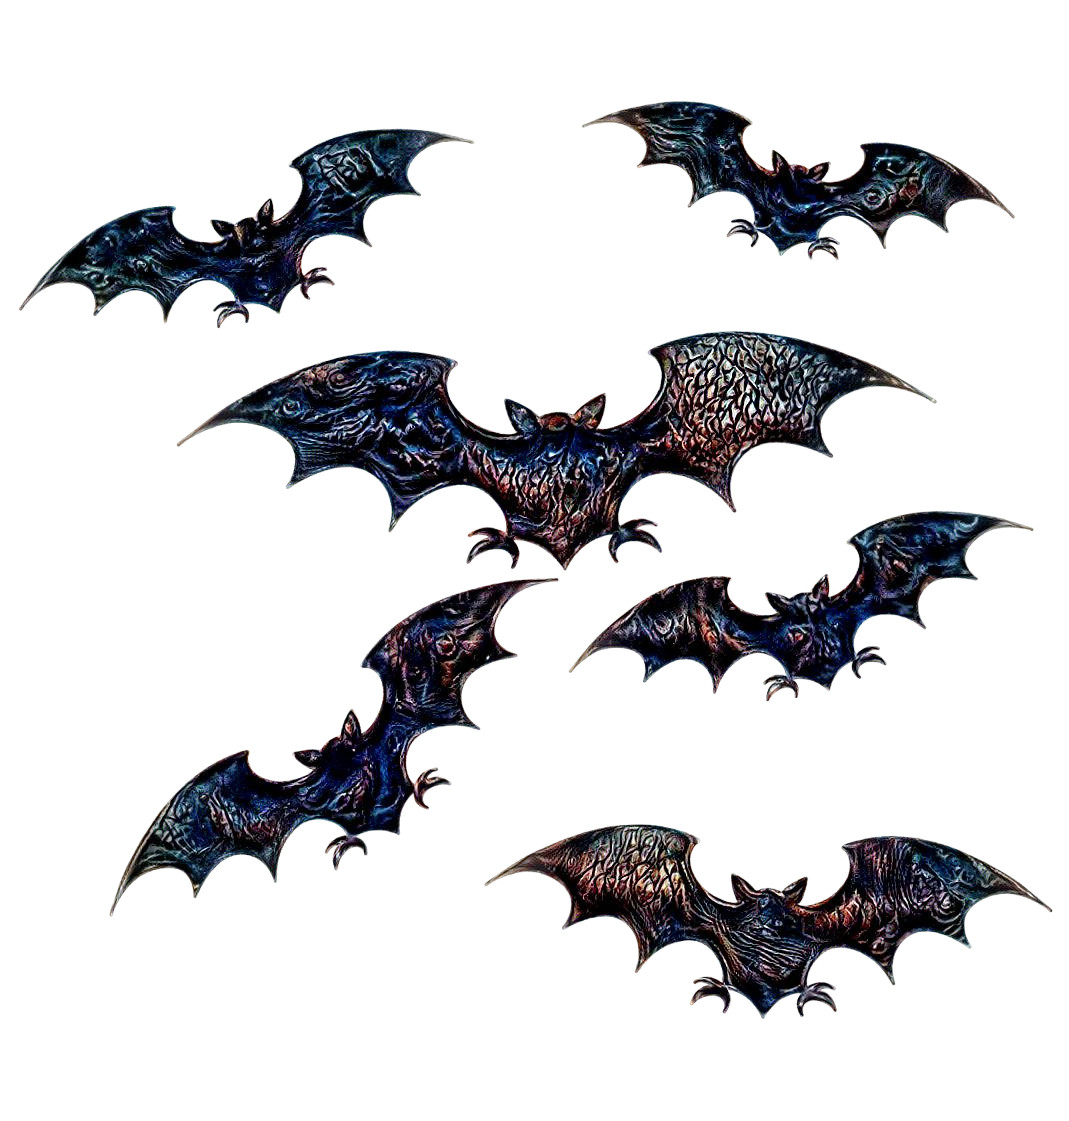 Steampunk-ish bats